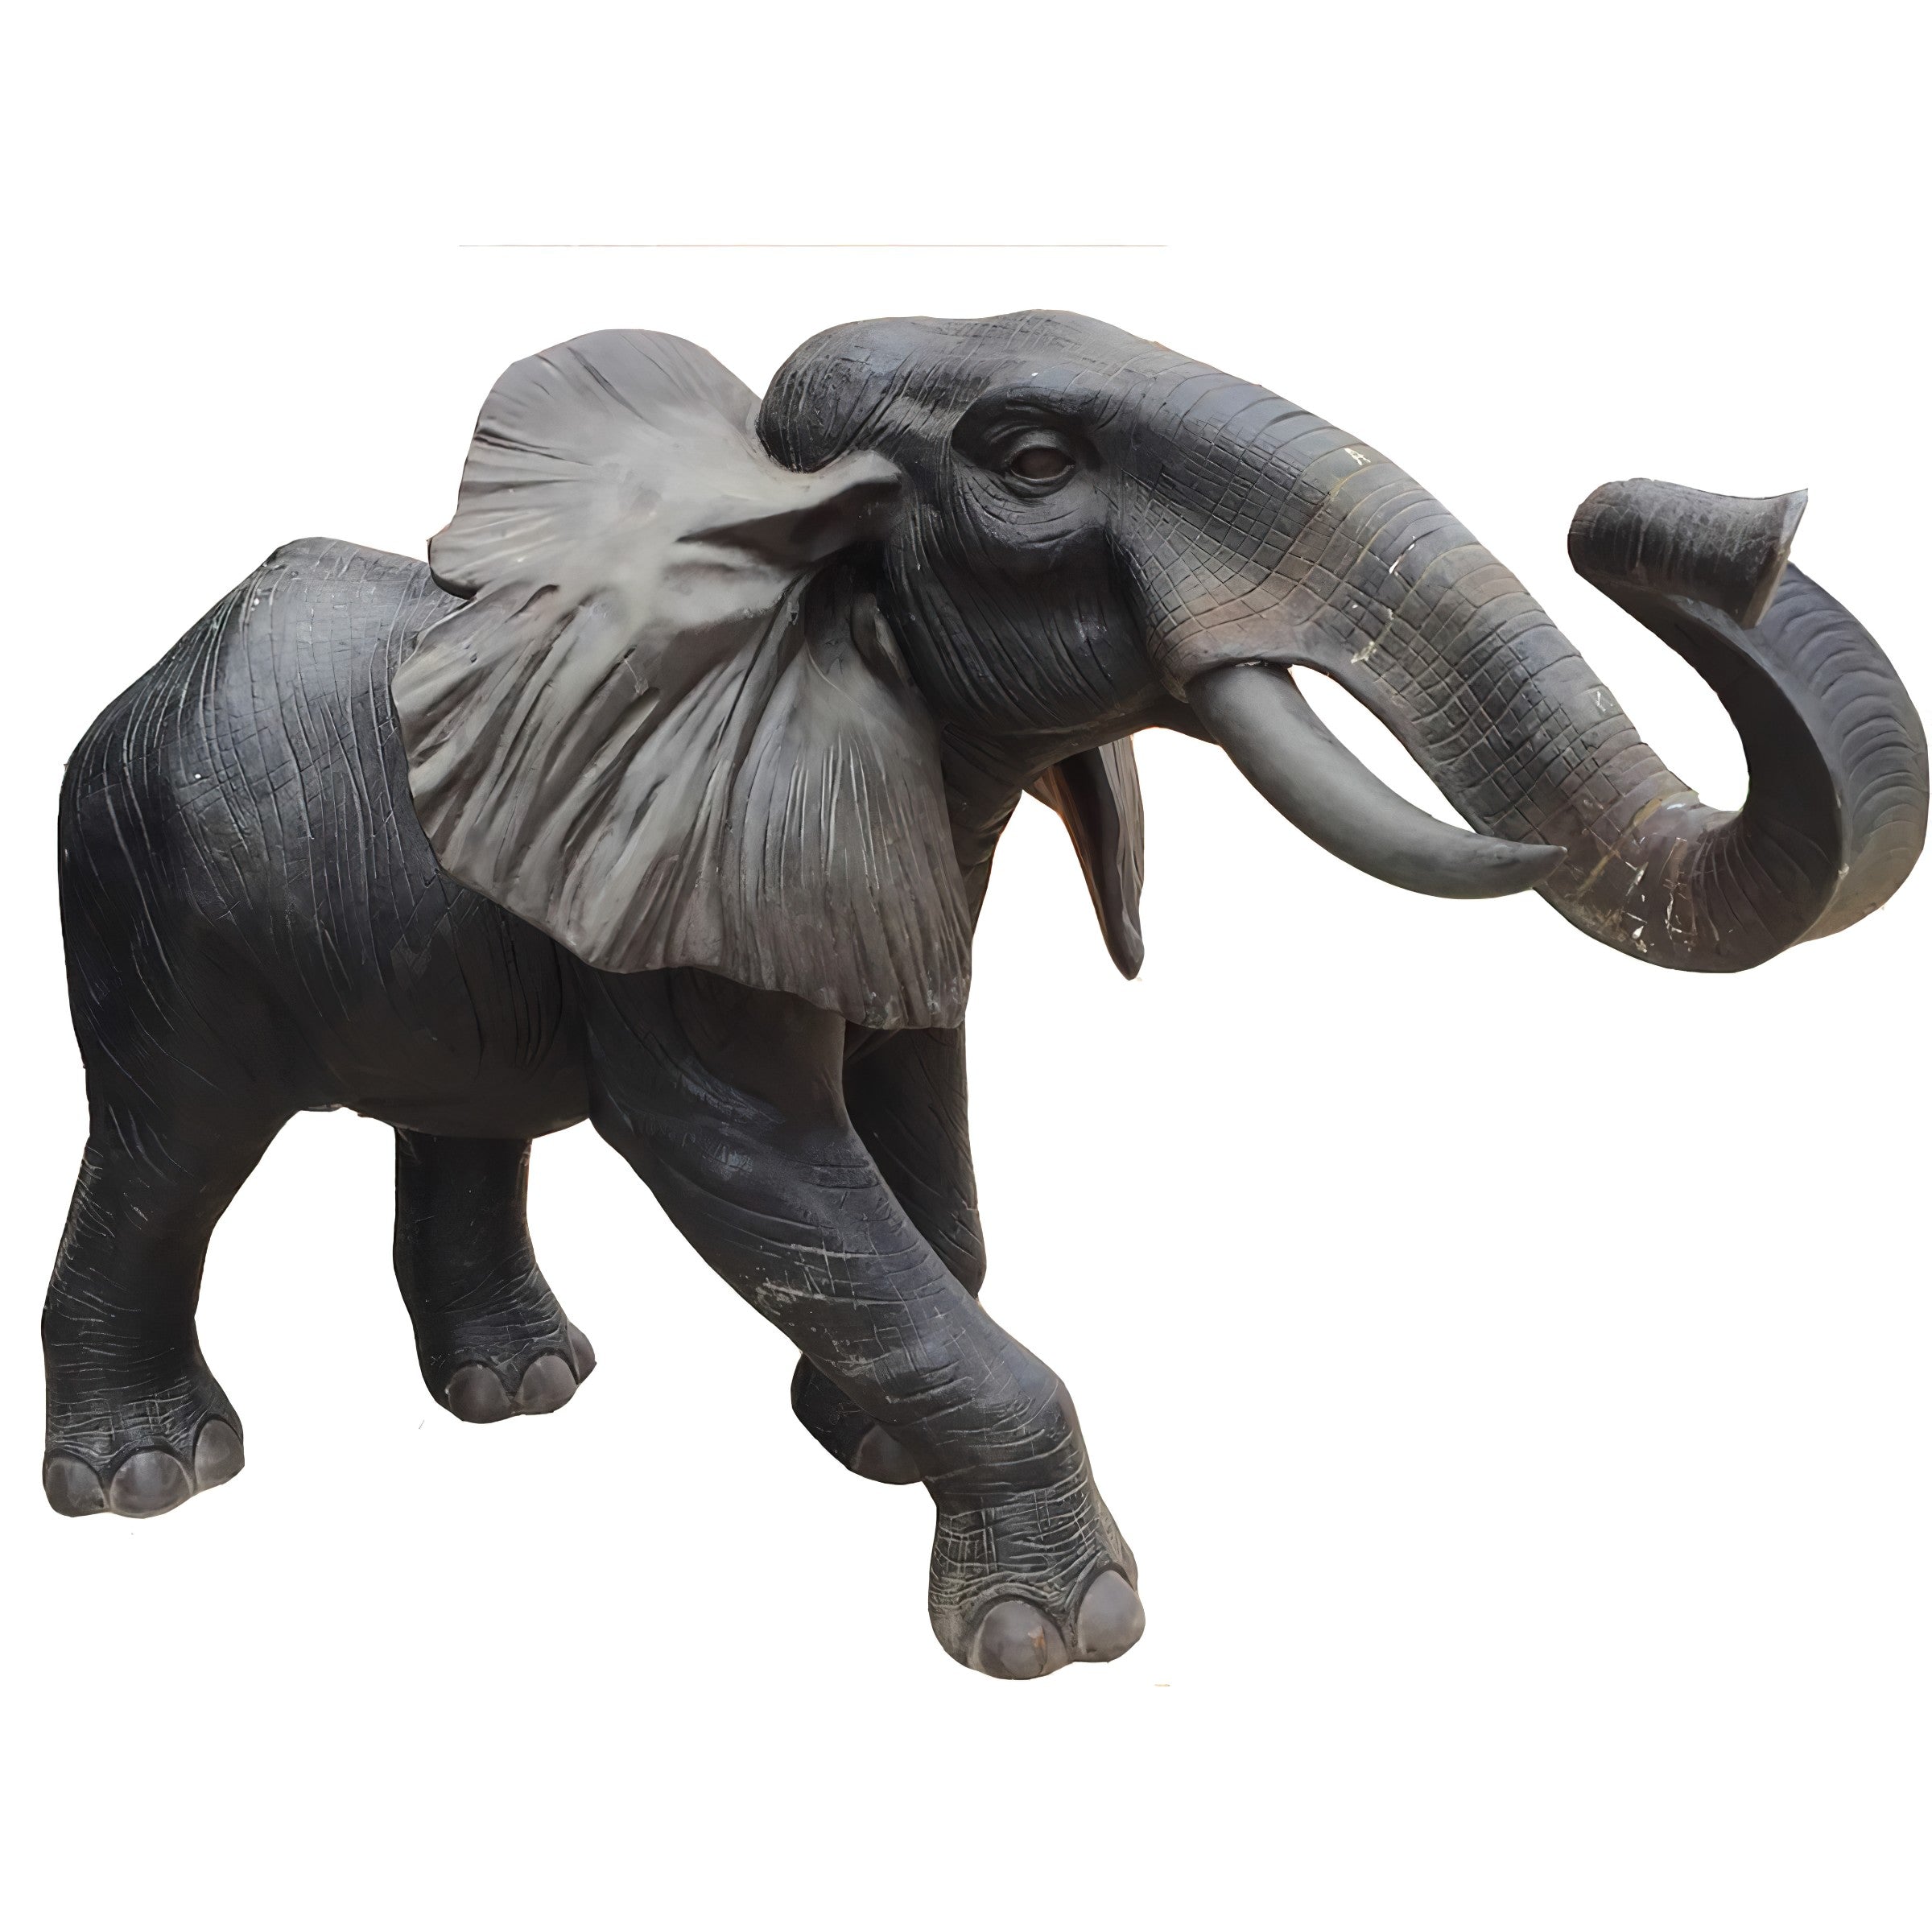 Bronze African Elephant Sculpture